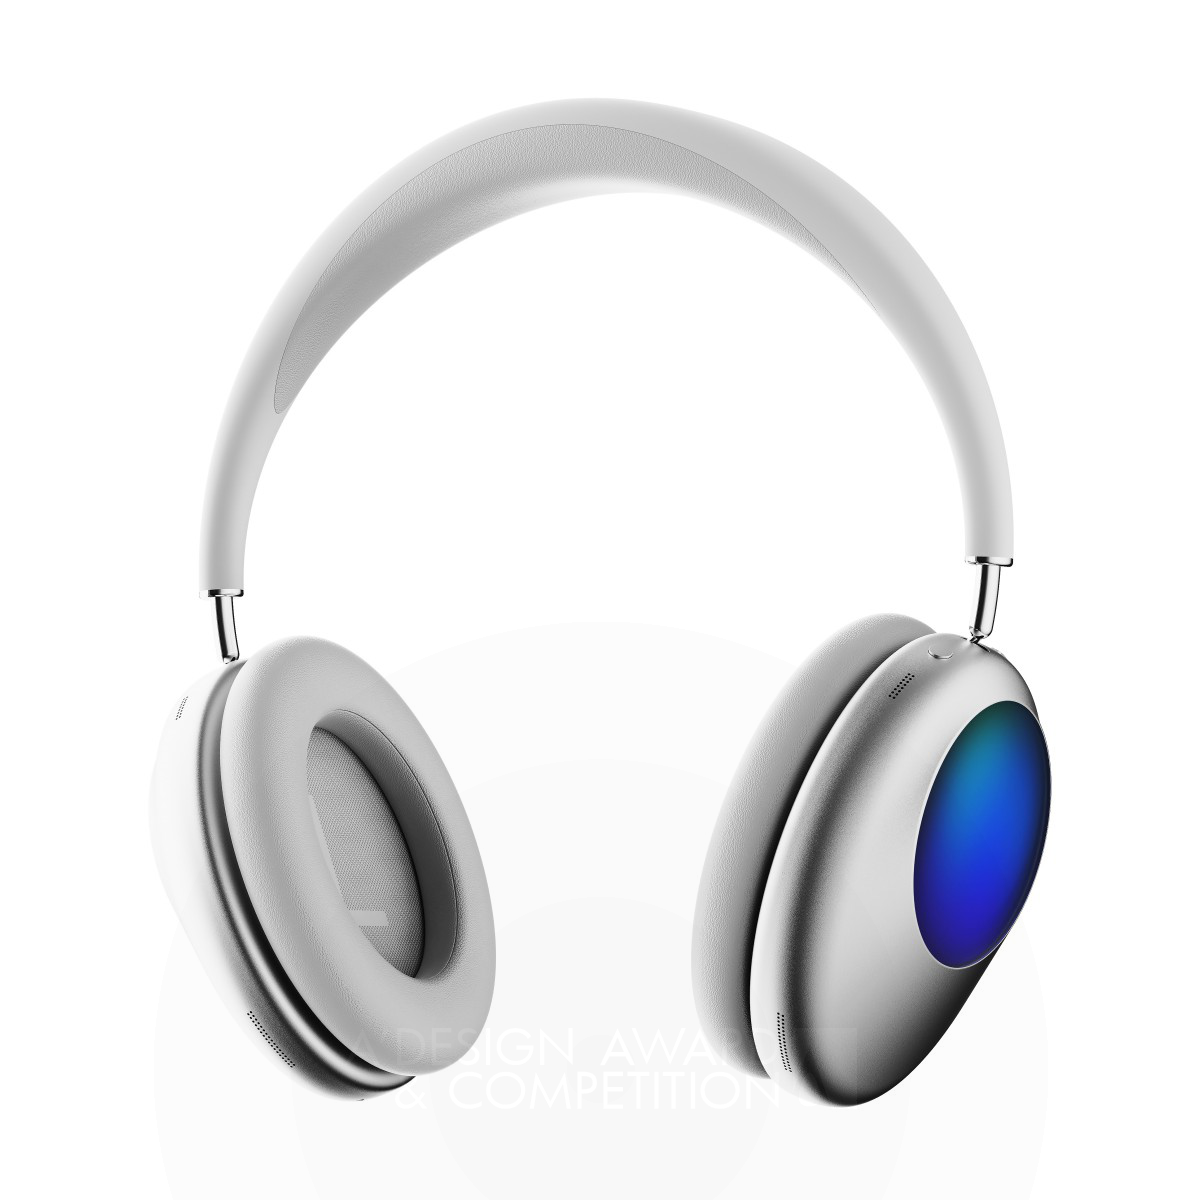 Portal One Headphone by Zhenghao Huang Bronze Audio and Sound Equipment Design Award Winner 2024 